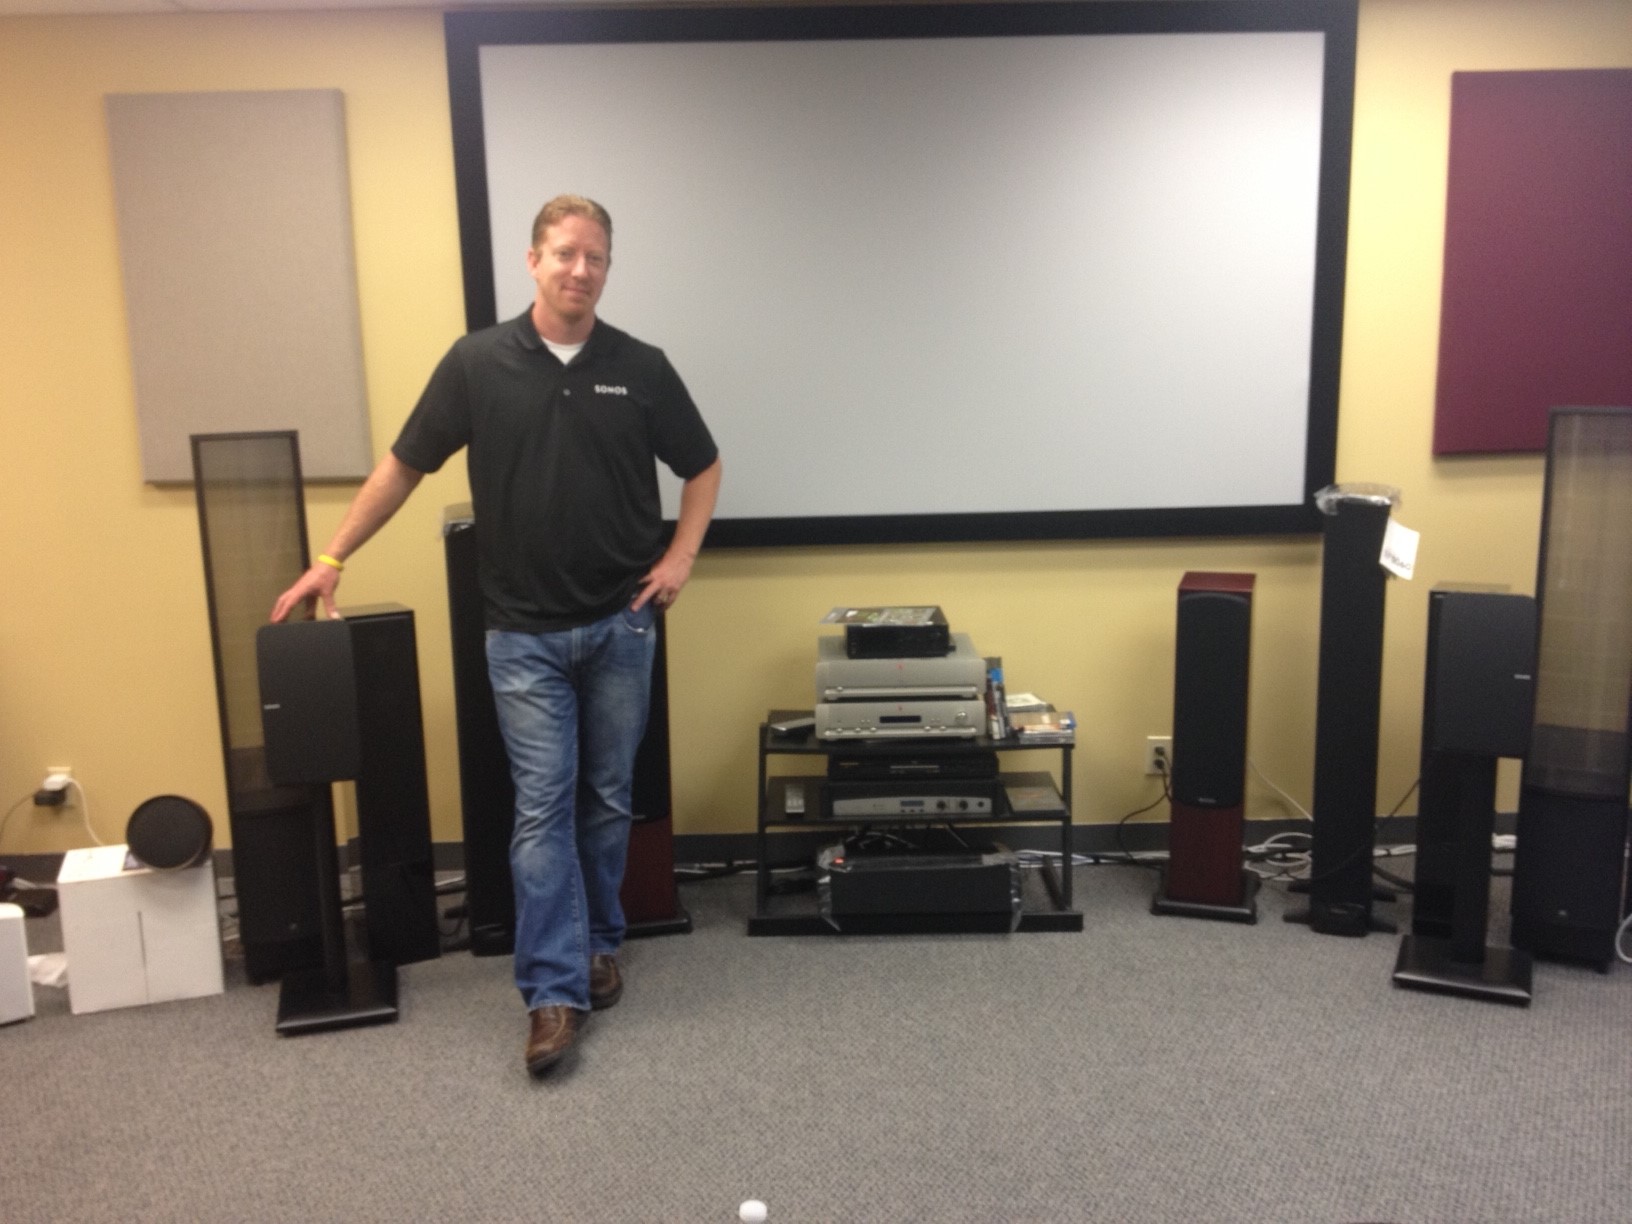 San Diego Sonos PLAY5 speaker